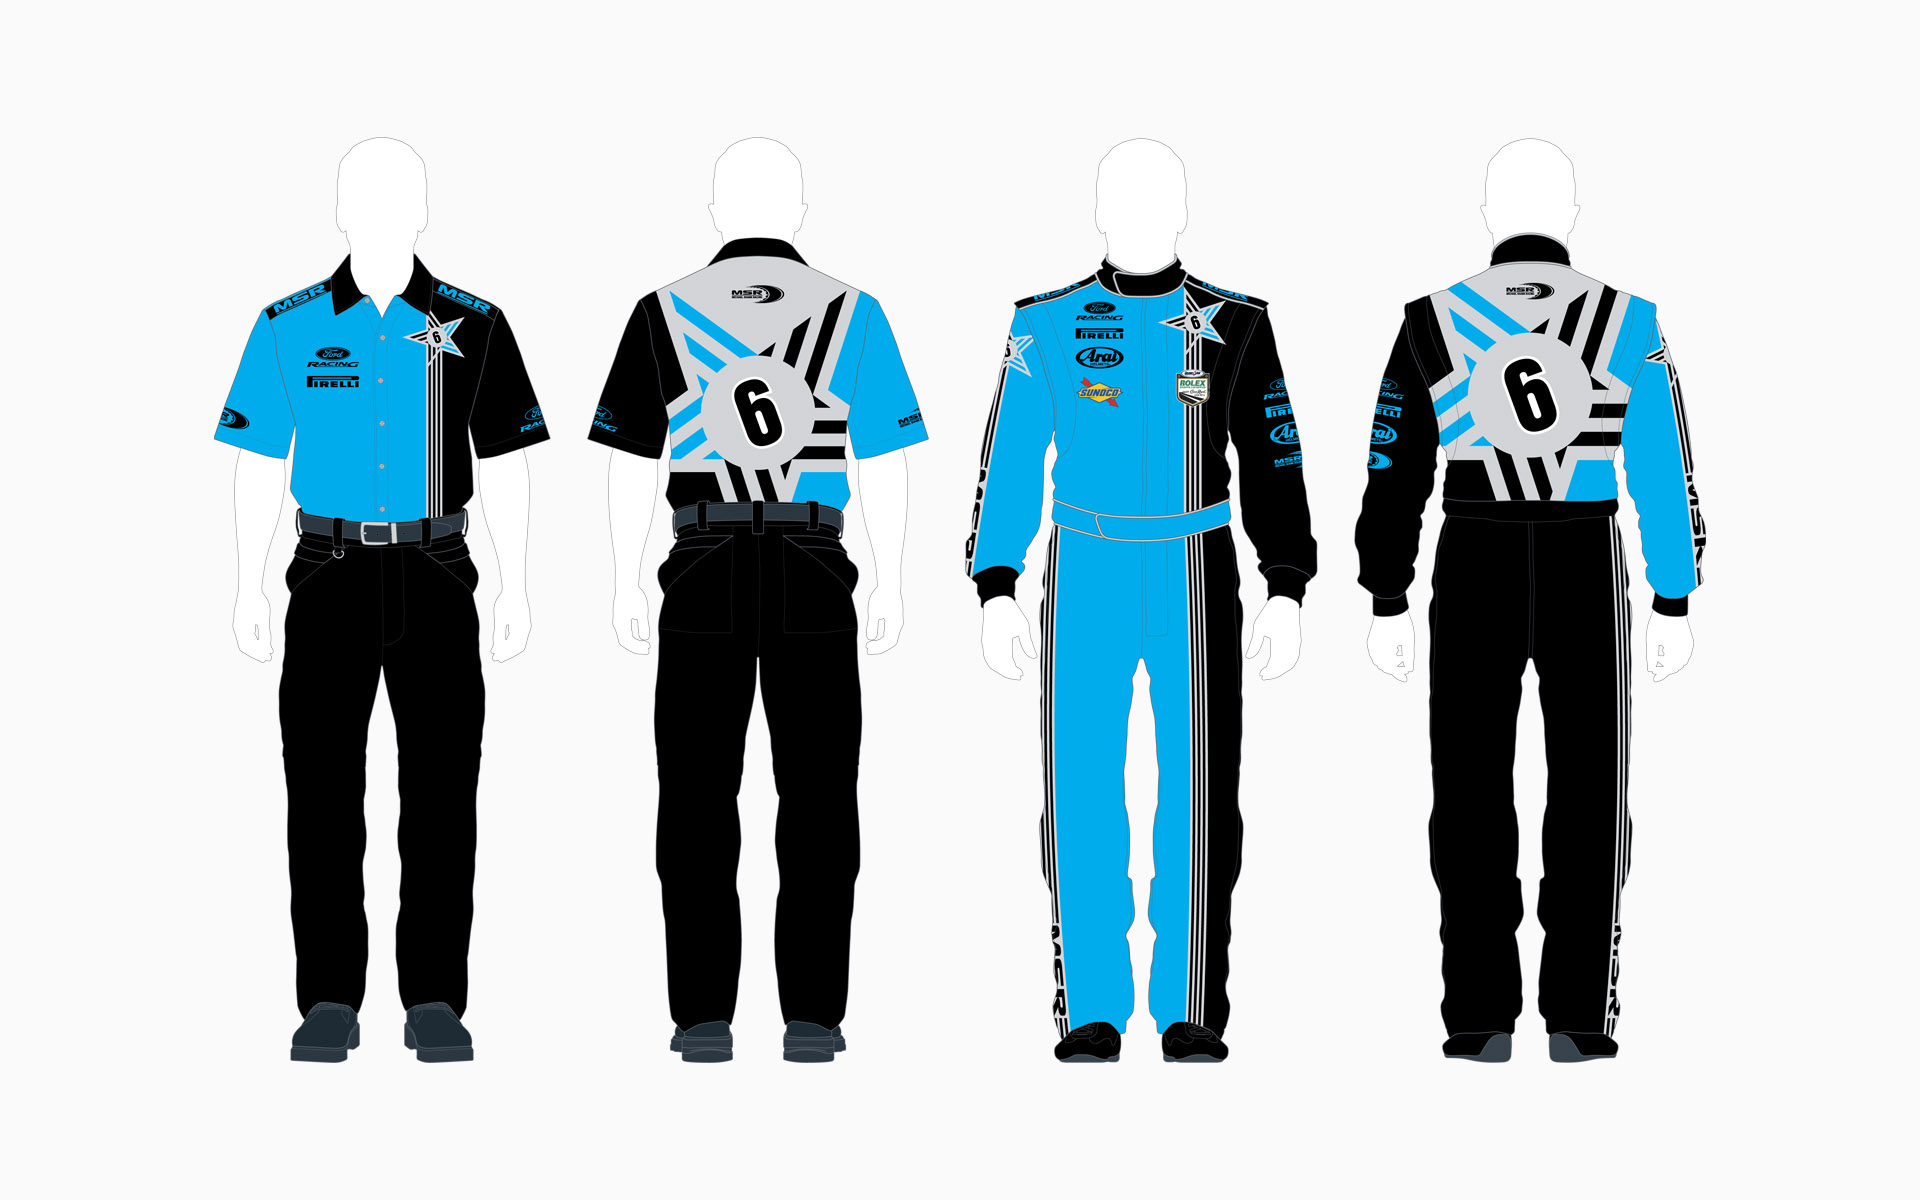 2006 Michael Shank Racing Crew Shirt and Firesuit